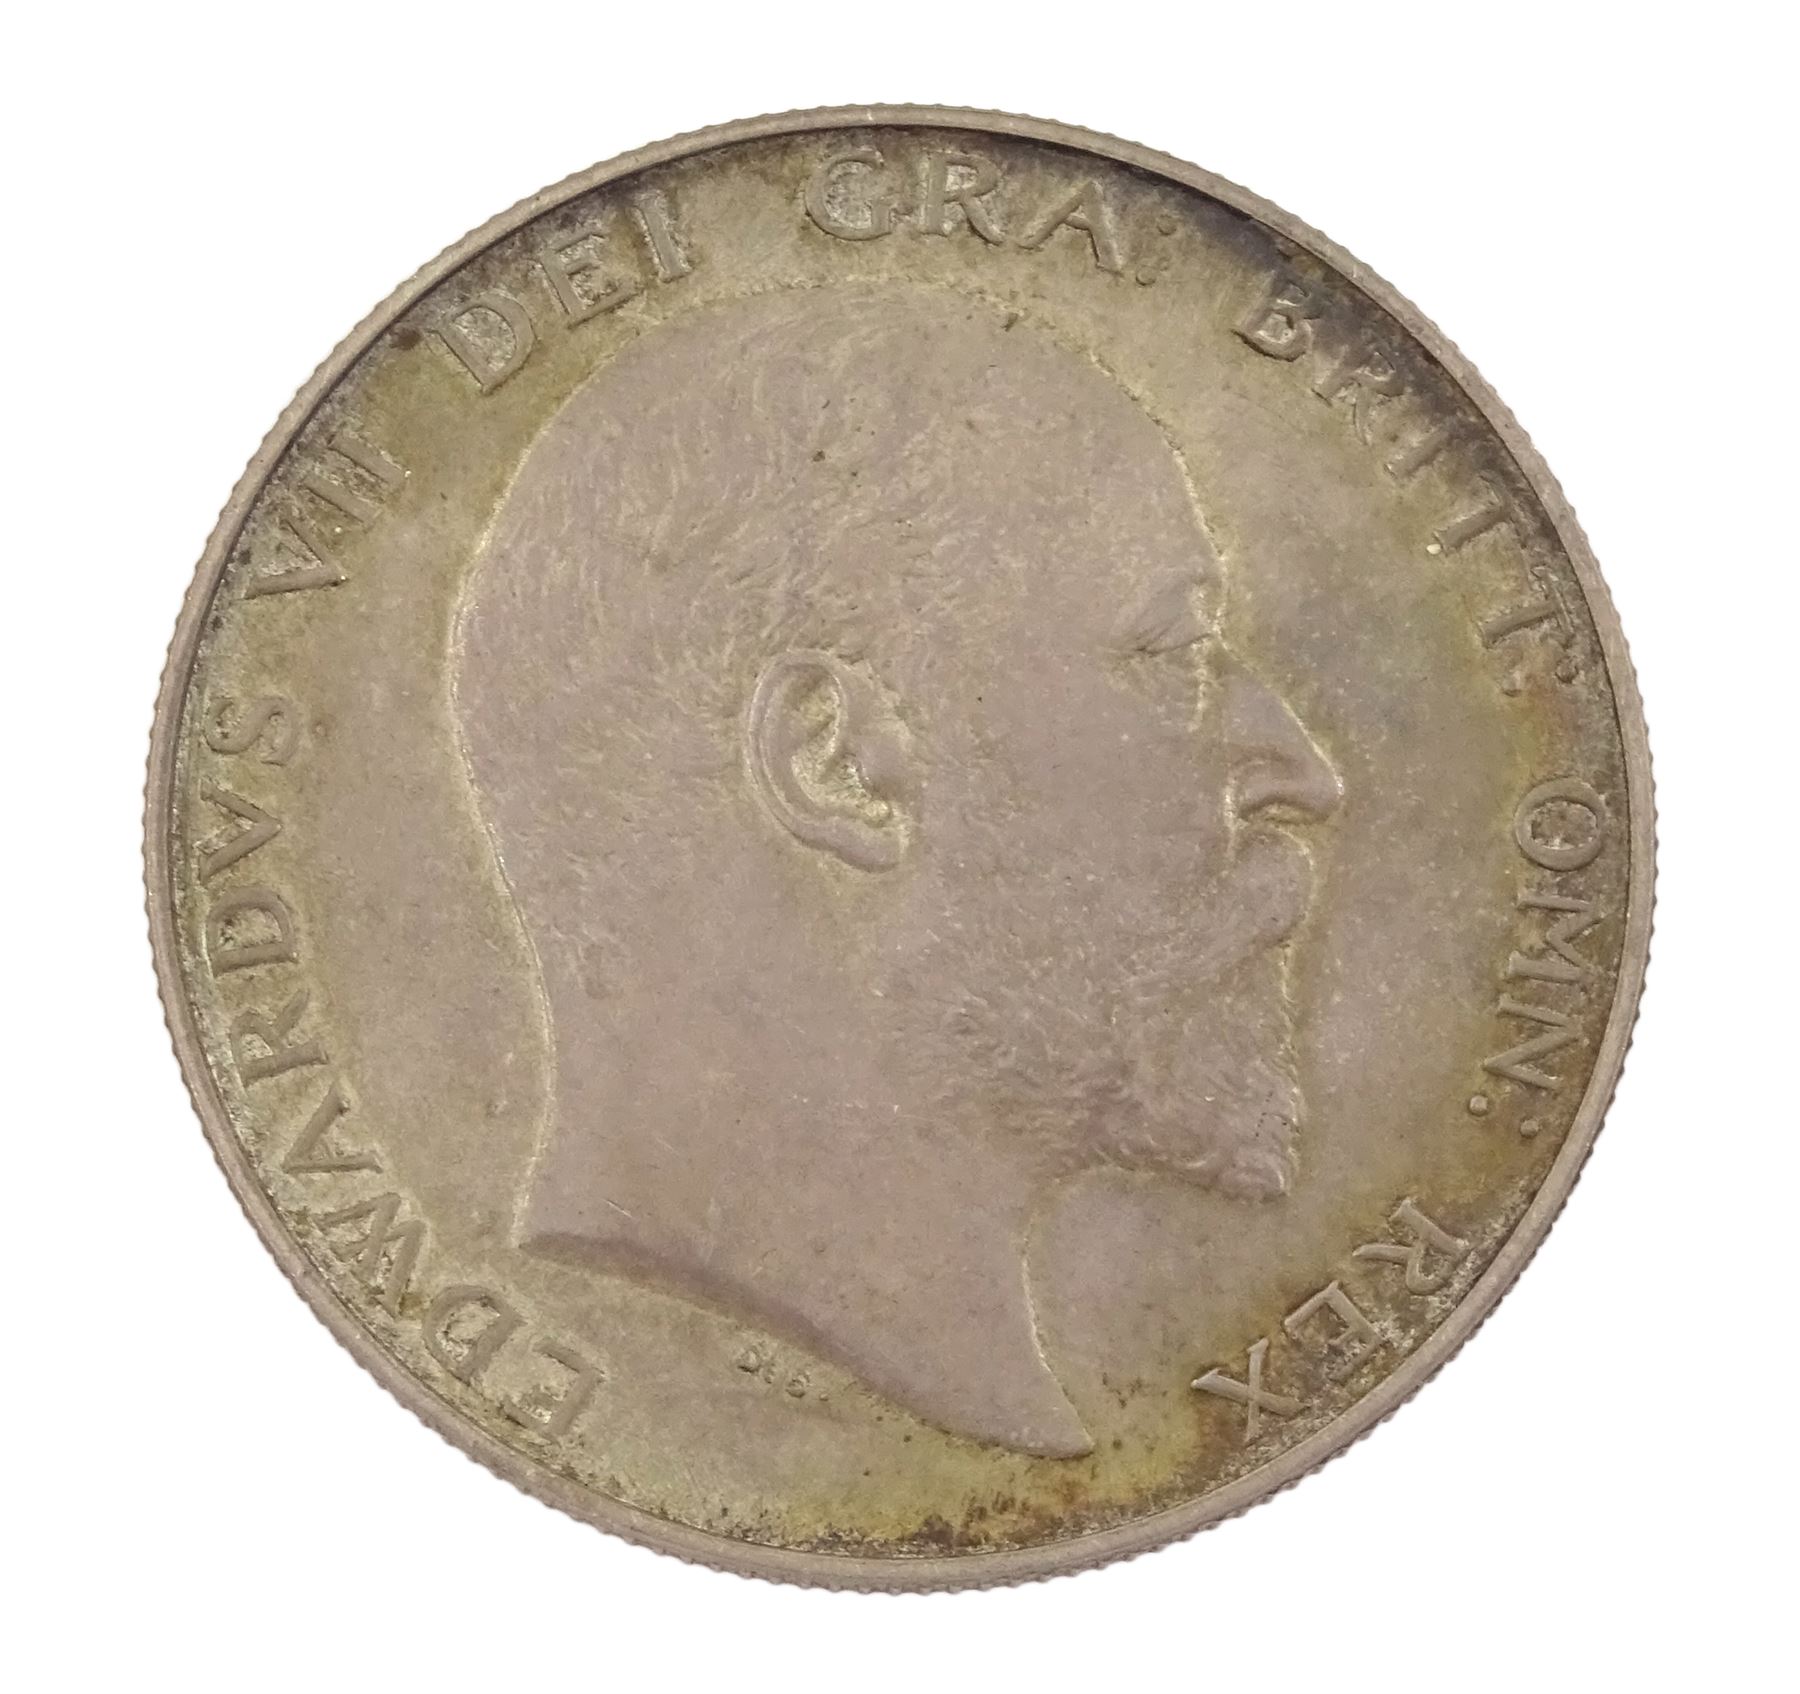 King Edward VII 1902 matt proof short coin set - Image 16 of 26